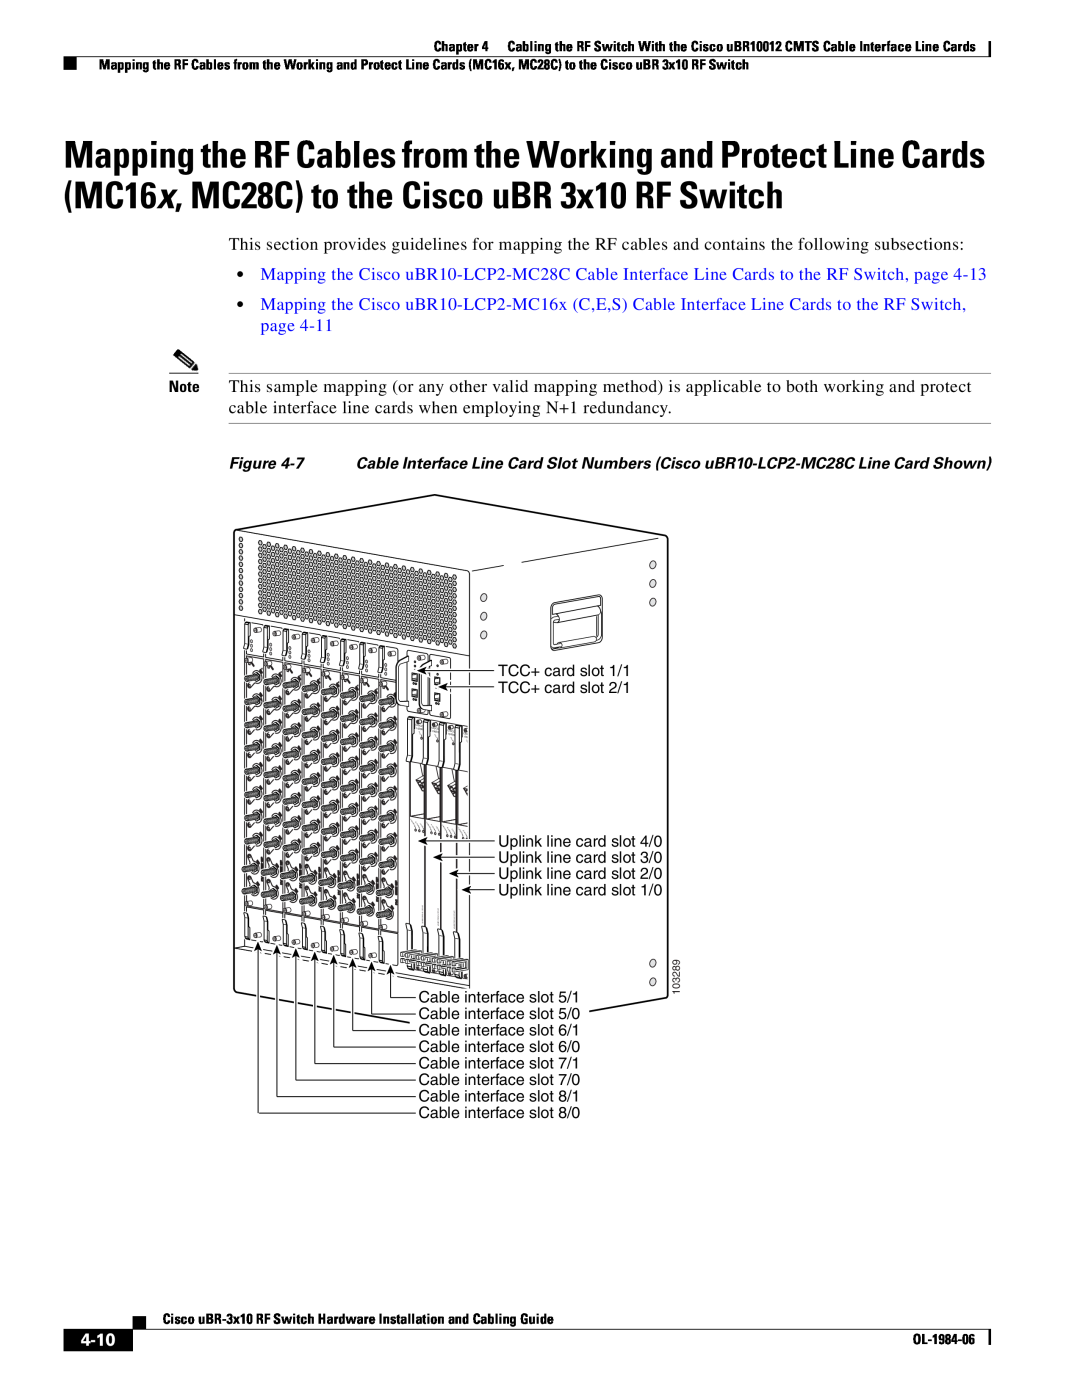 Cisco Systems UBR-3X10 manual 4-10, TCC+ card slot 1/1 TCC+ card slot 2/1 